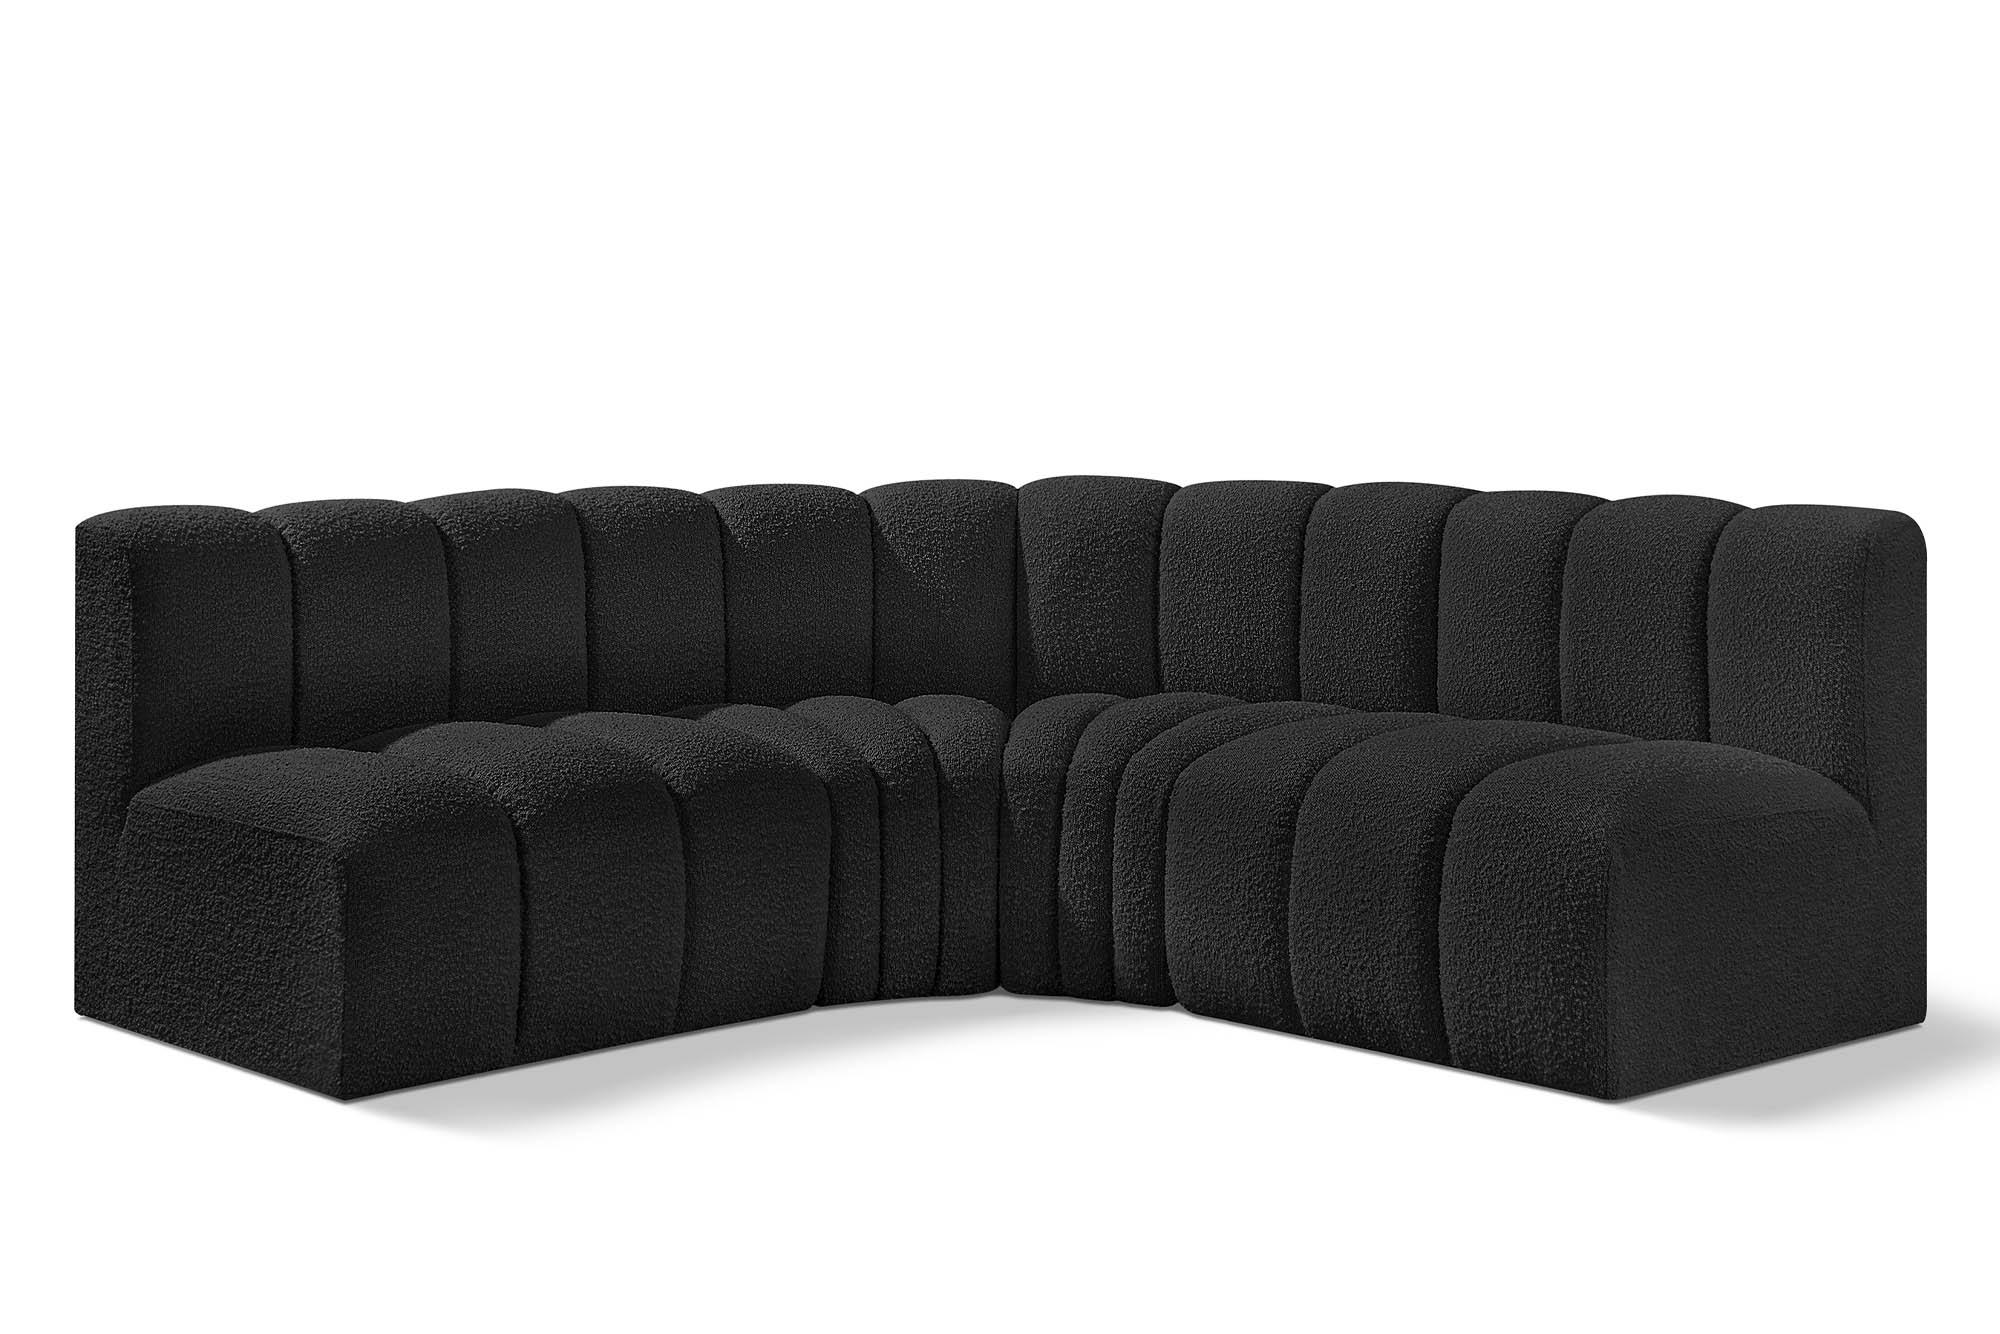 Contemporary, Modern Modular Sectional Sofa ARC 102Black-S4B 102Black-S4B in Black 